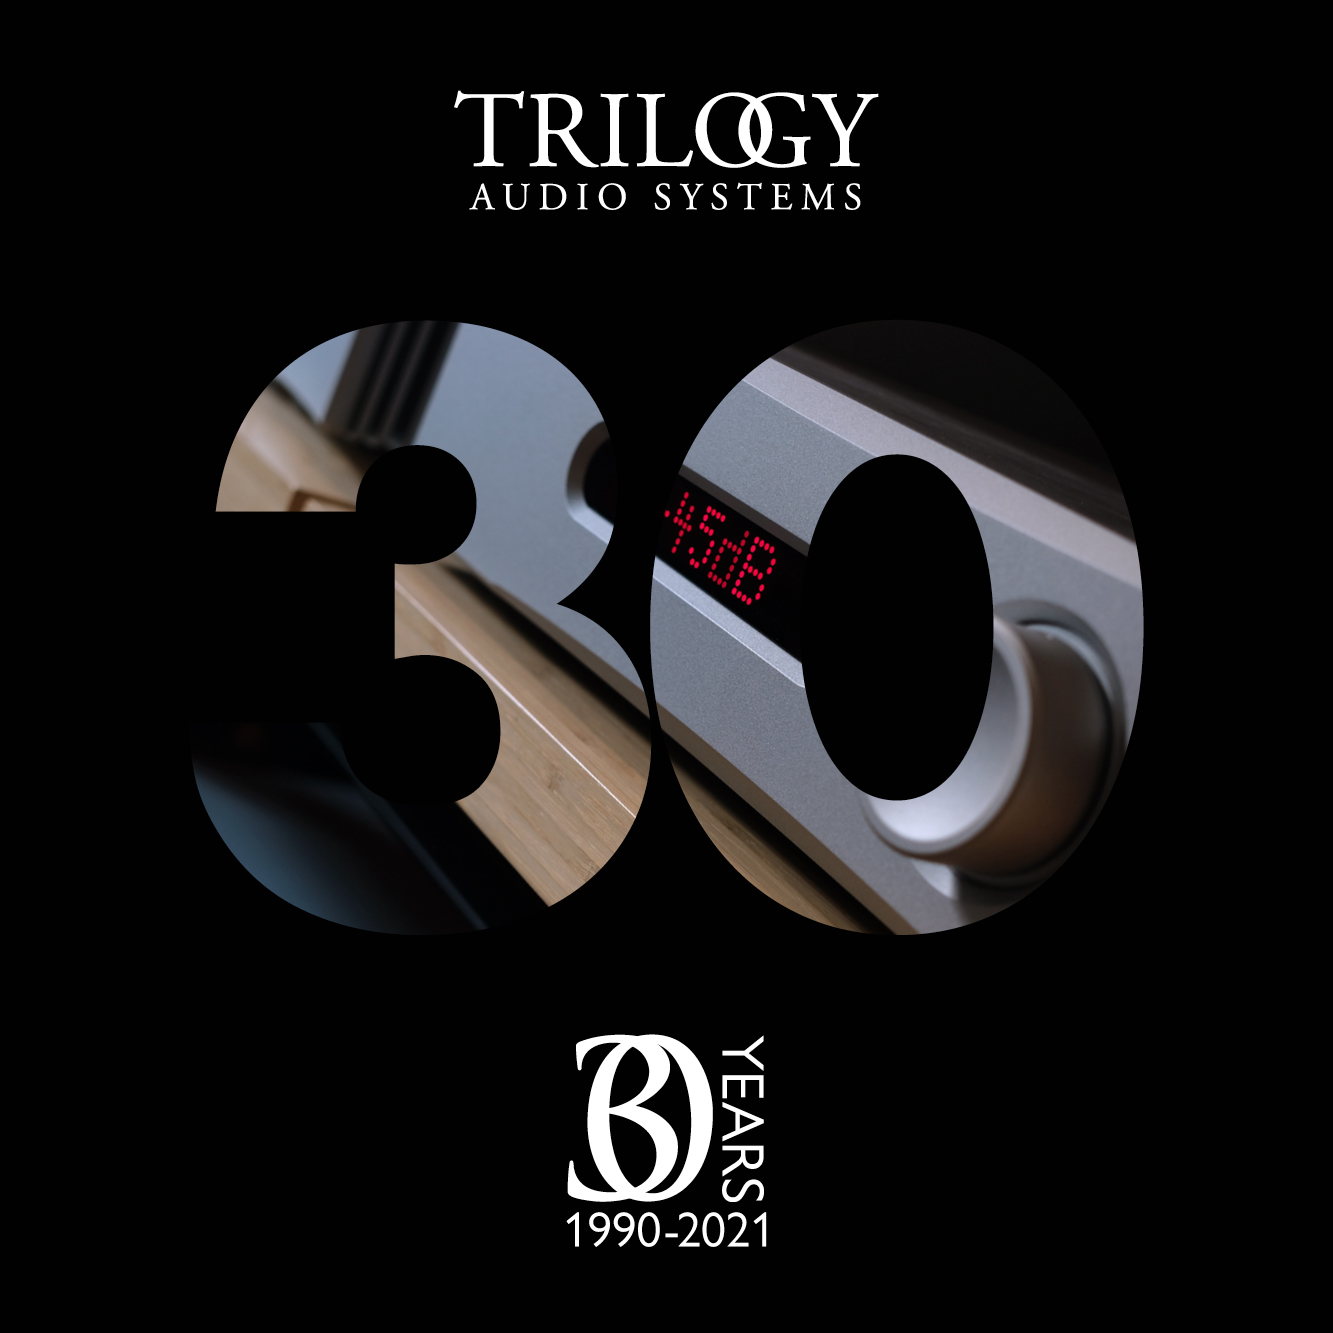 Trilogy Audio